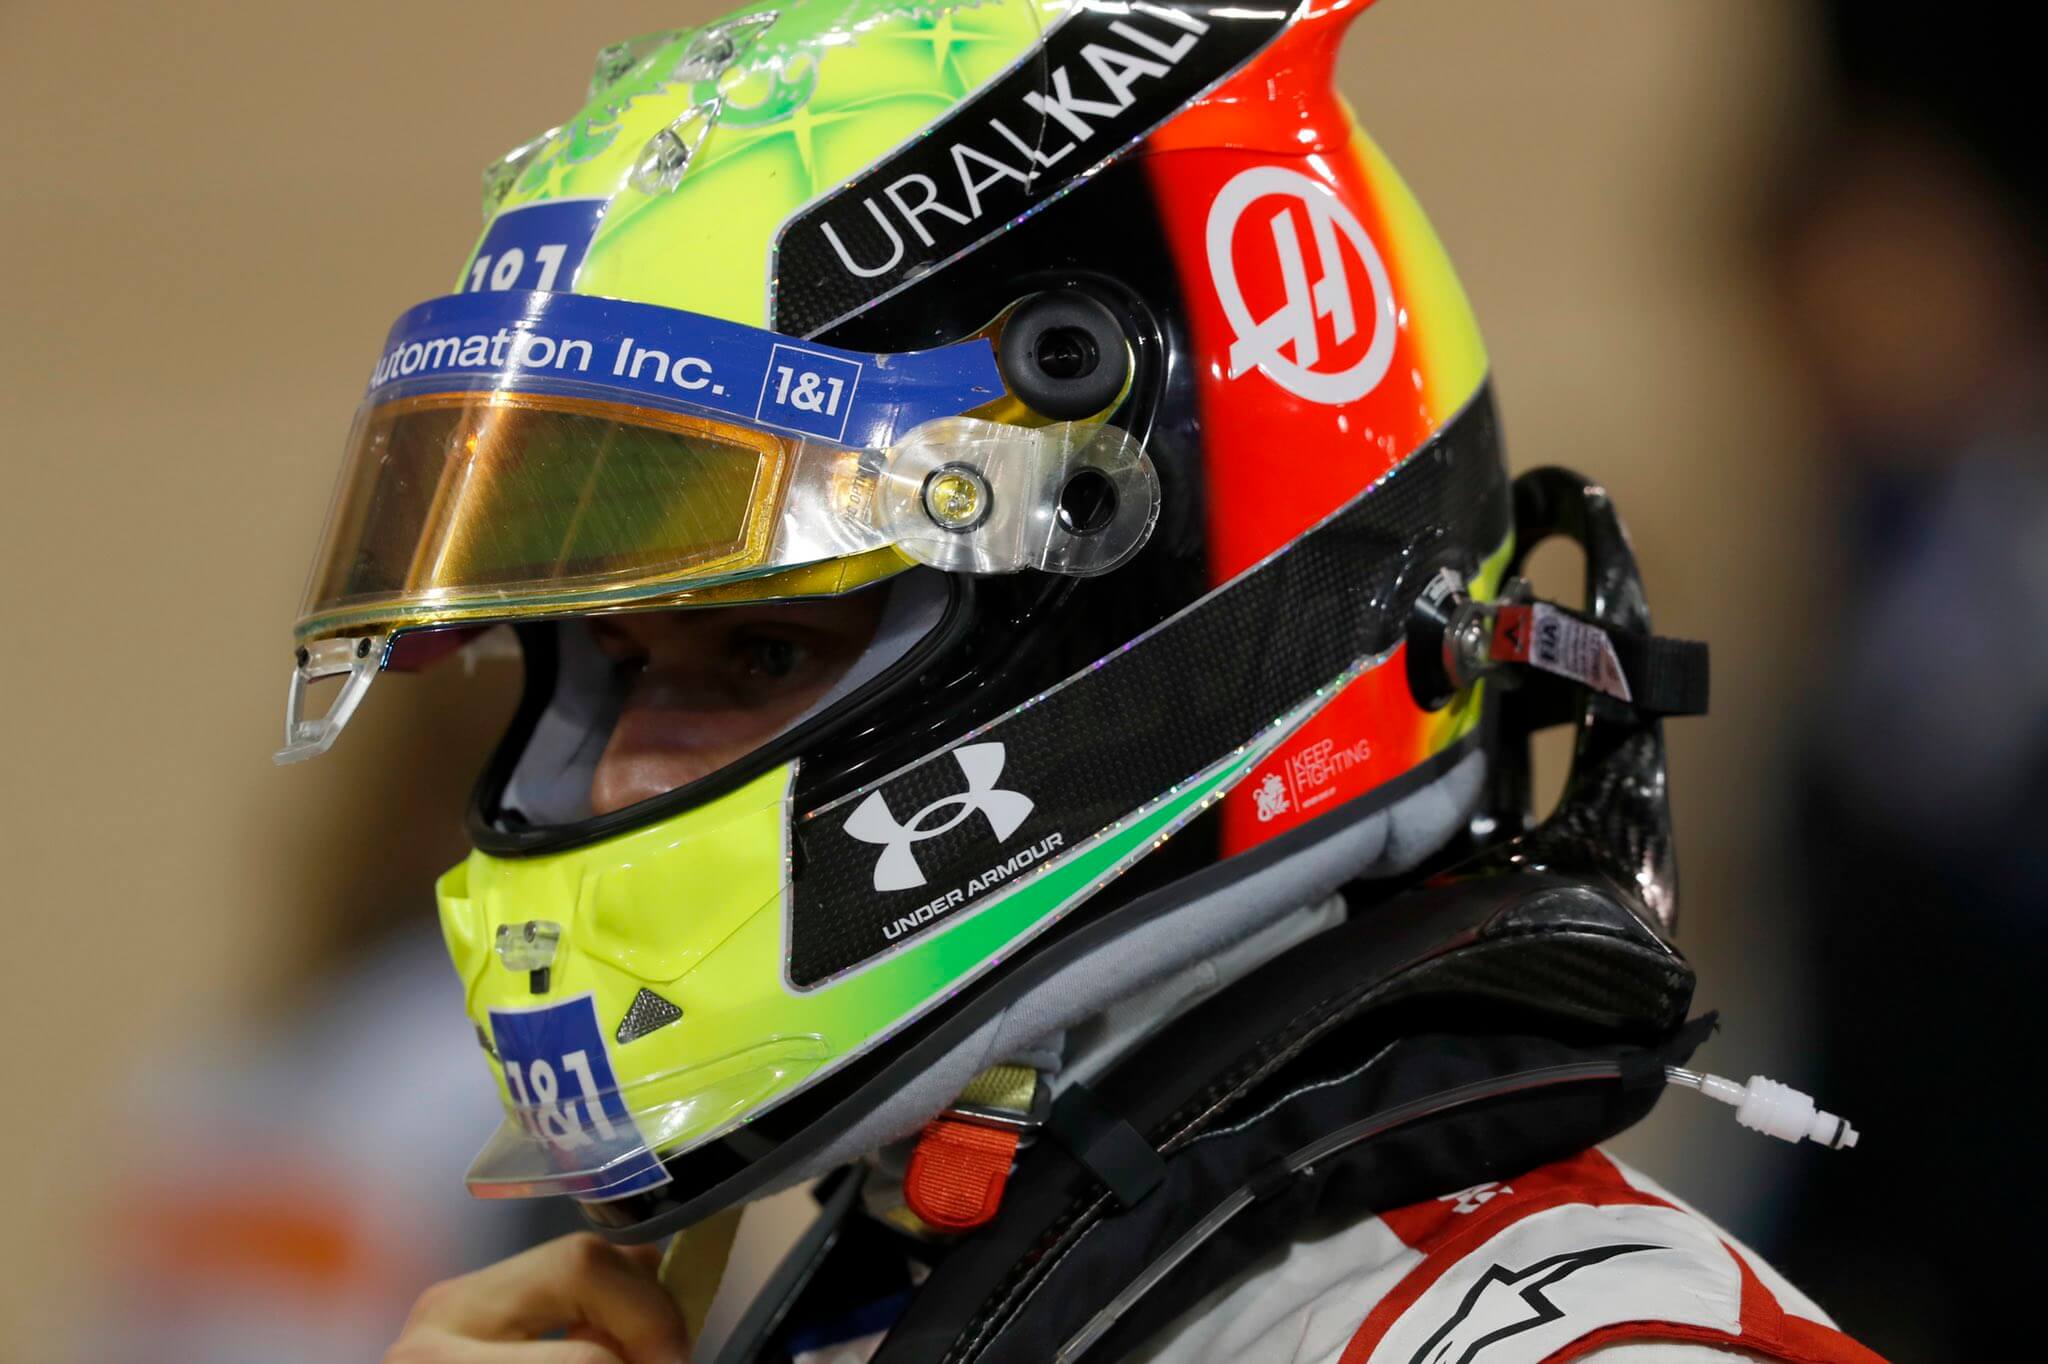 MICK SCHUMACHER'S HELMET FROM THE 2021 BAHRAIN GP | CM Helmets